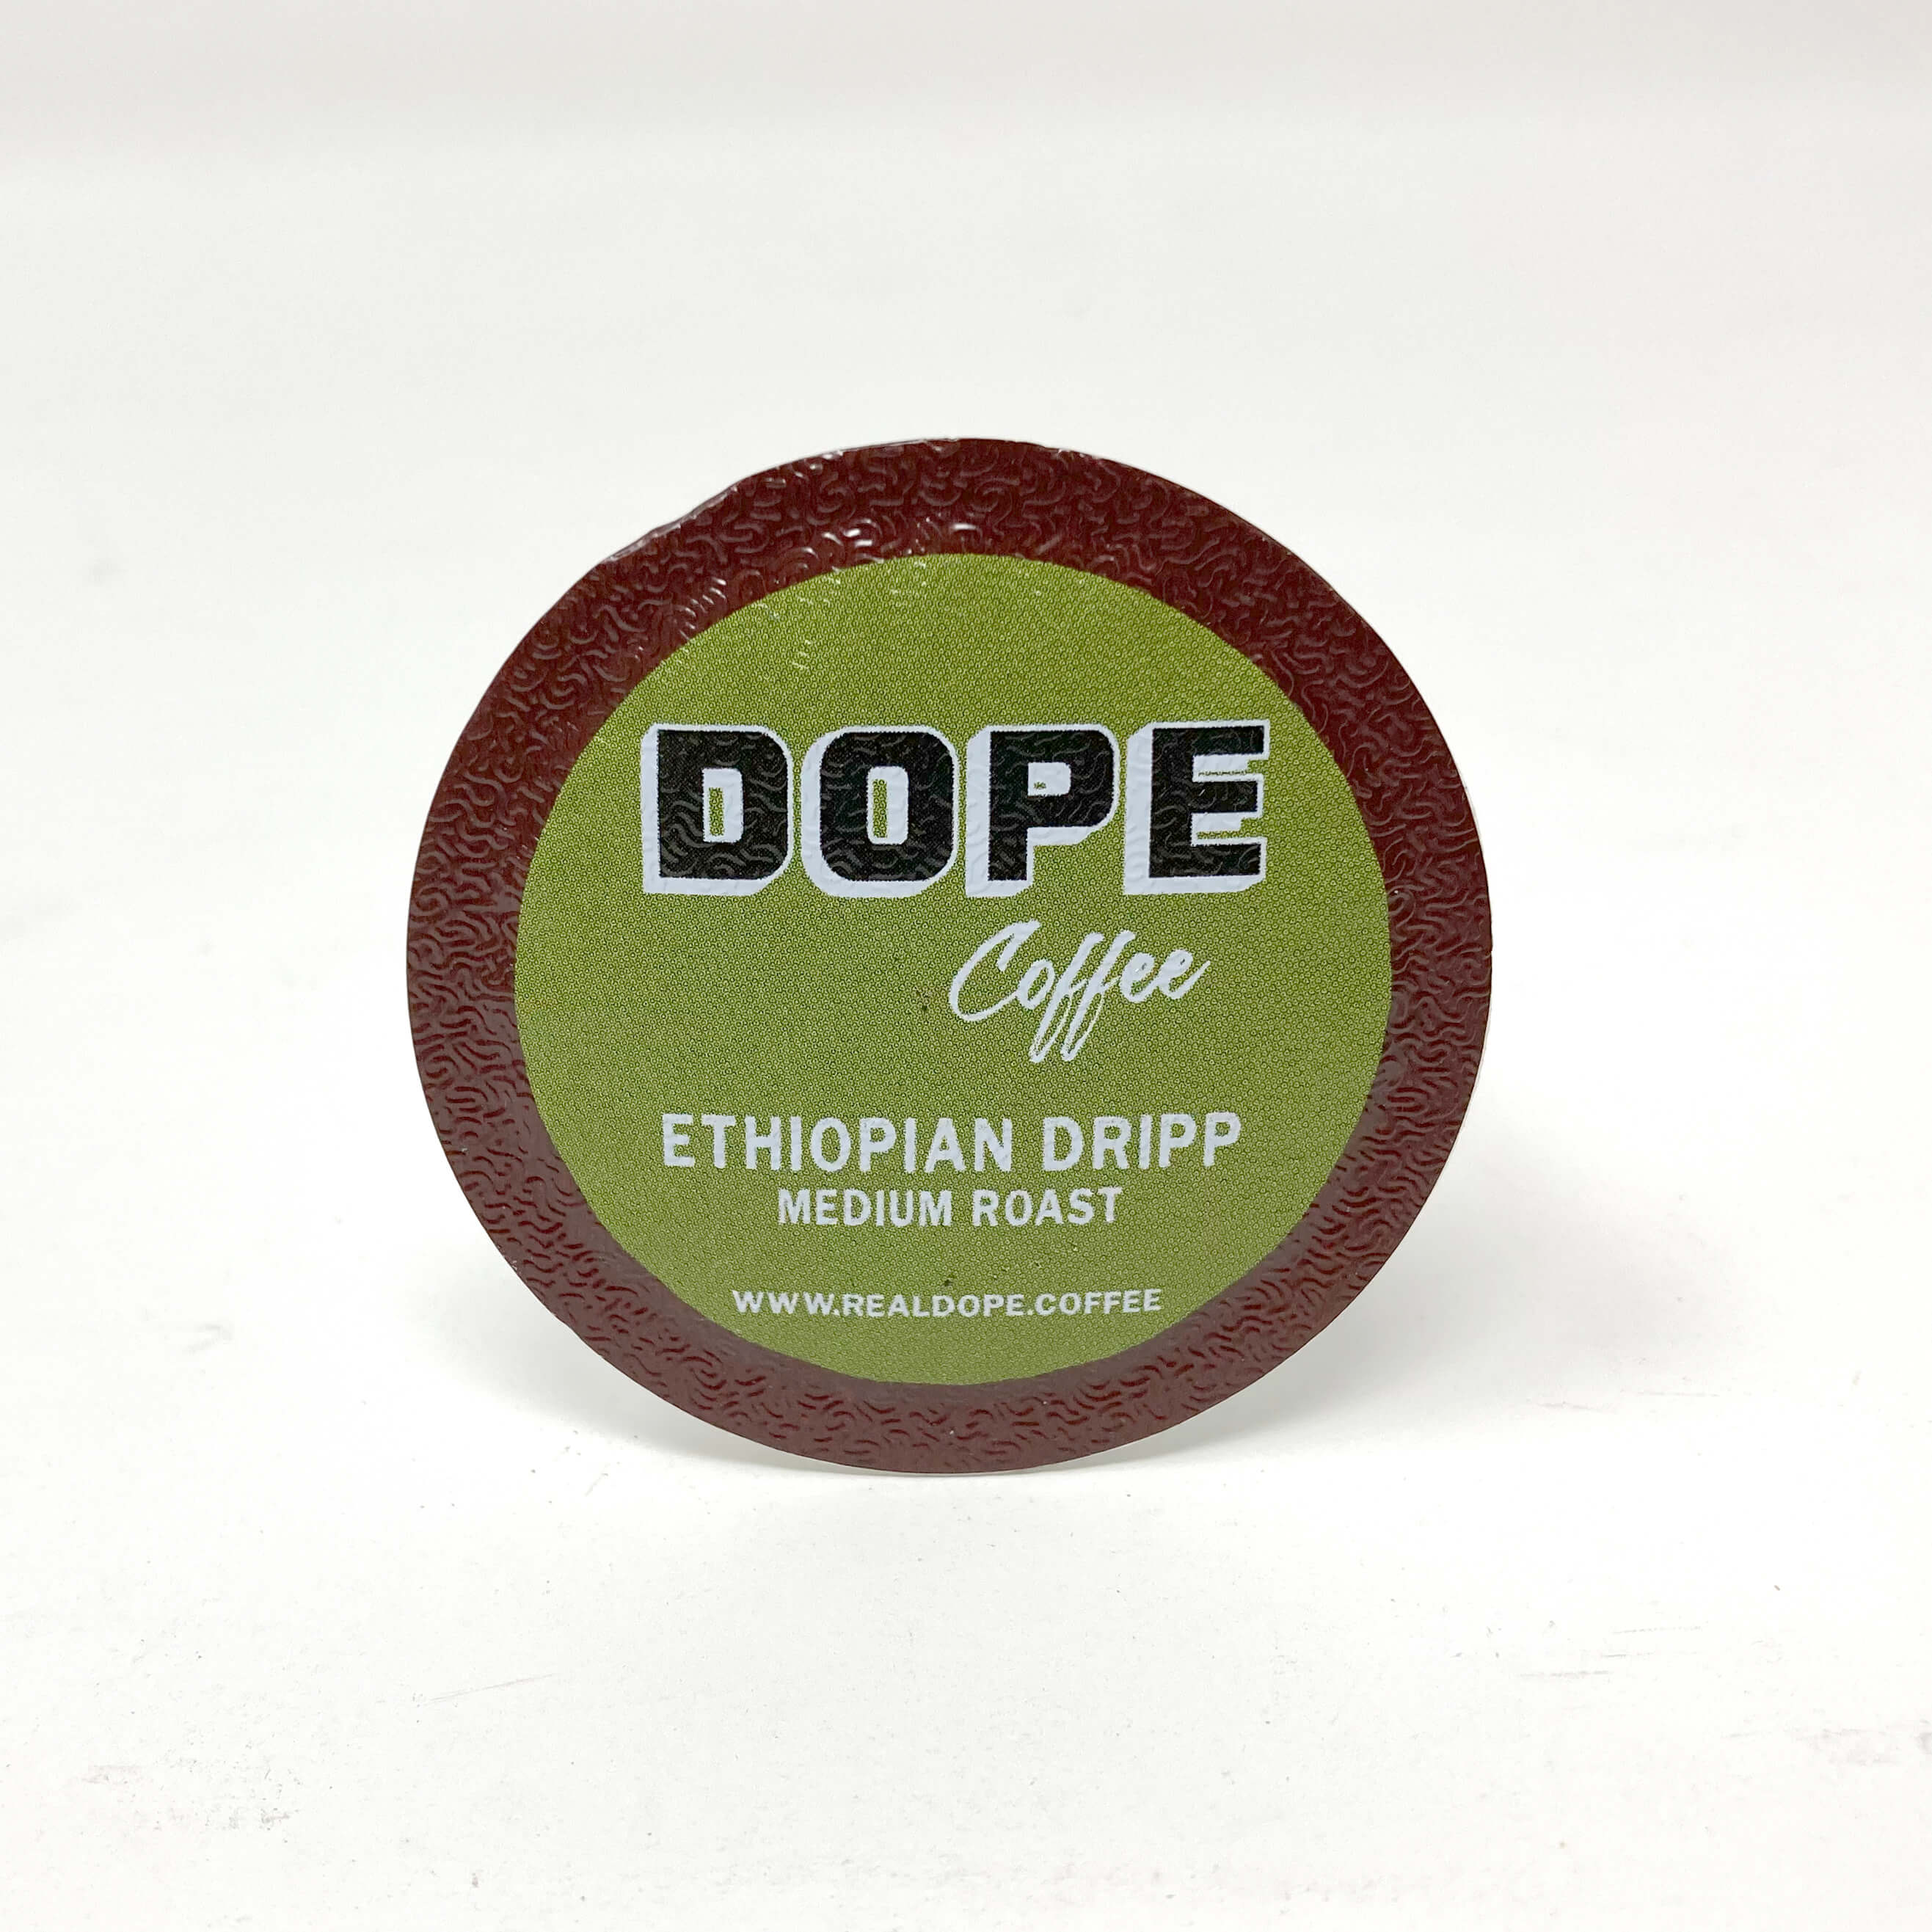 Ethiopian Dripp Coffee Pods K-Cups